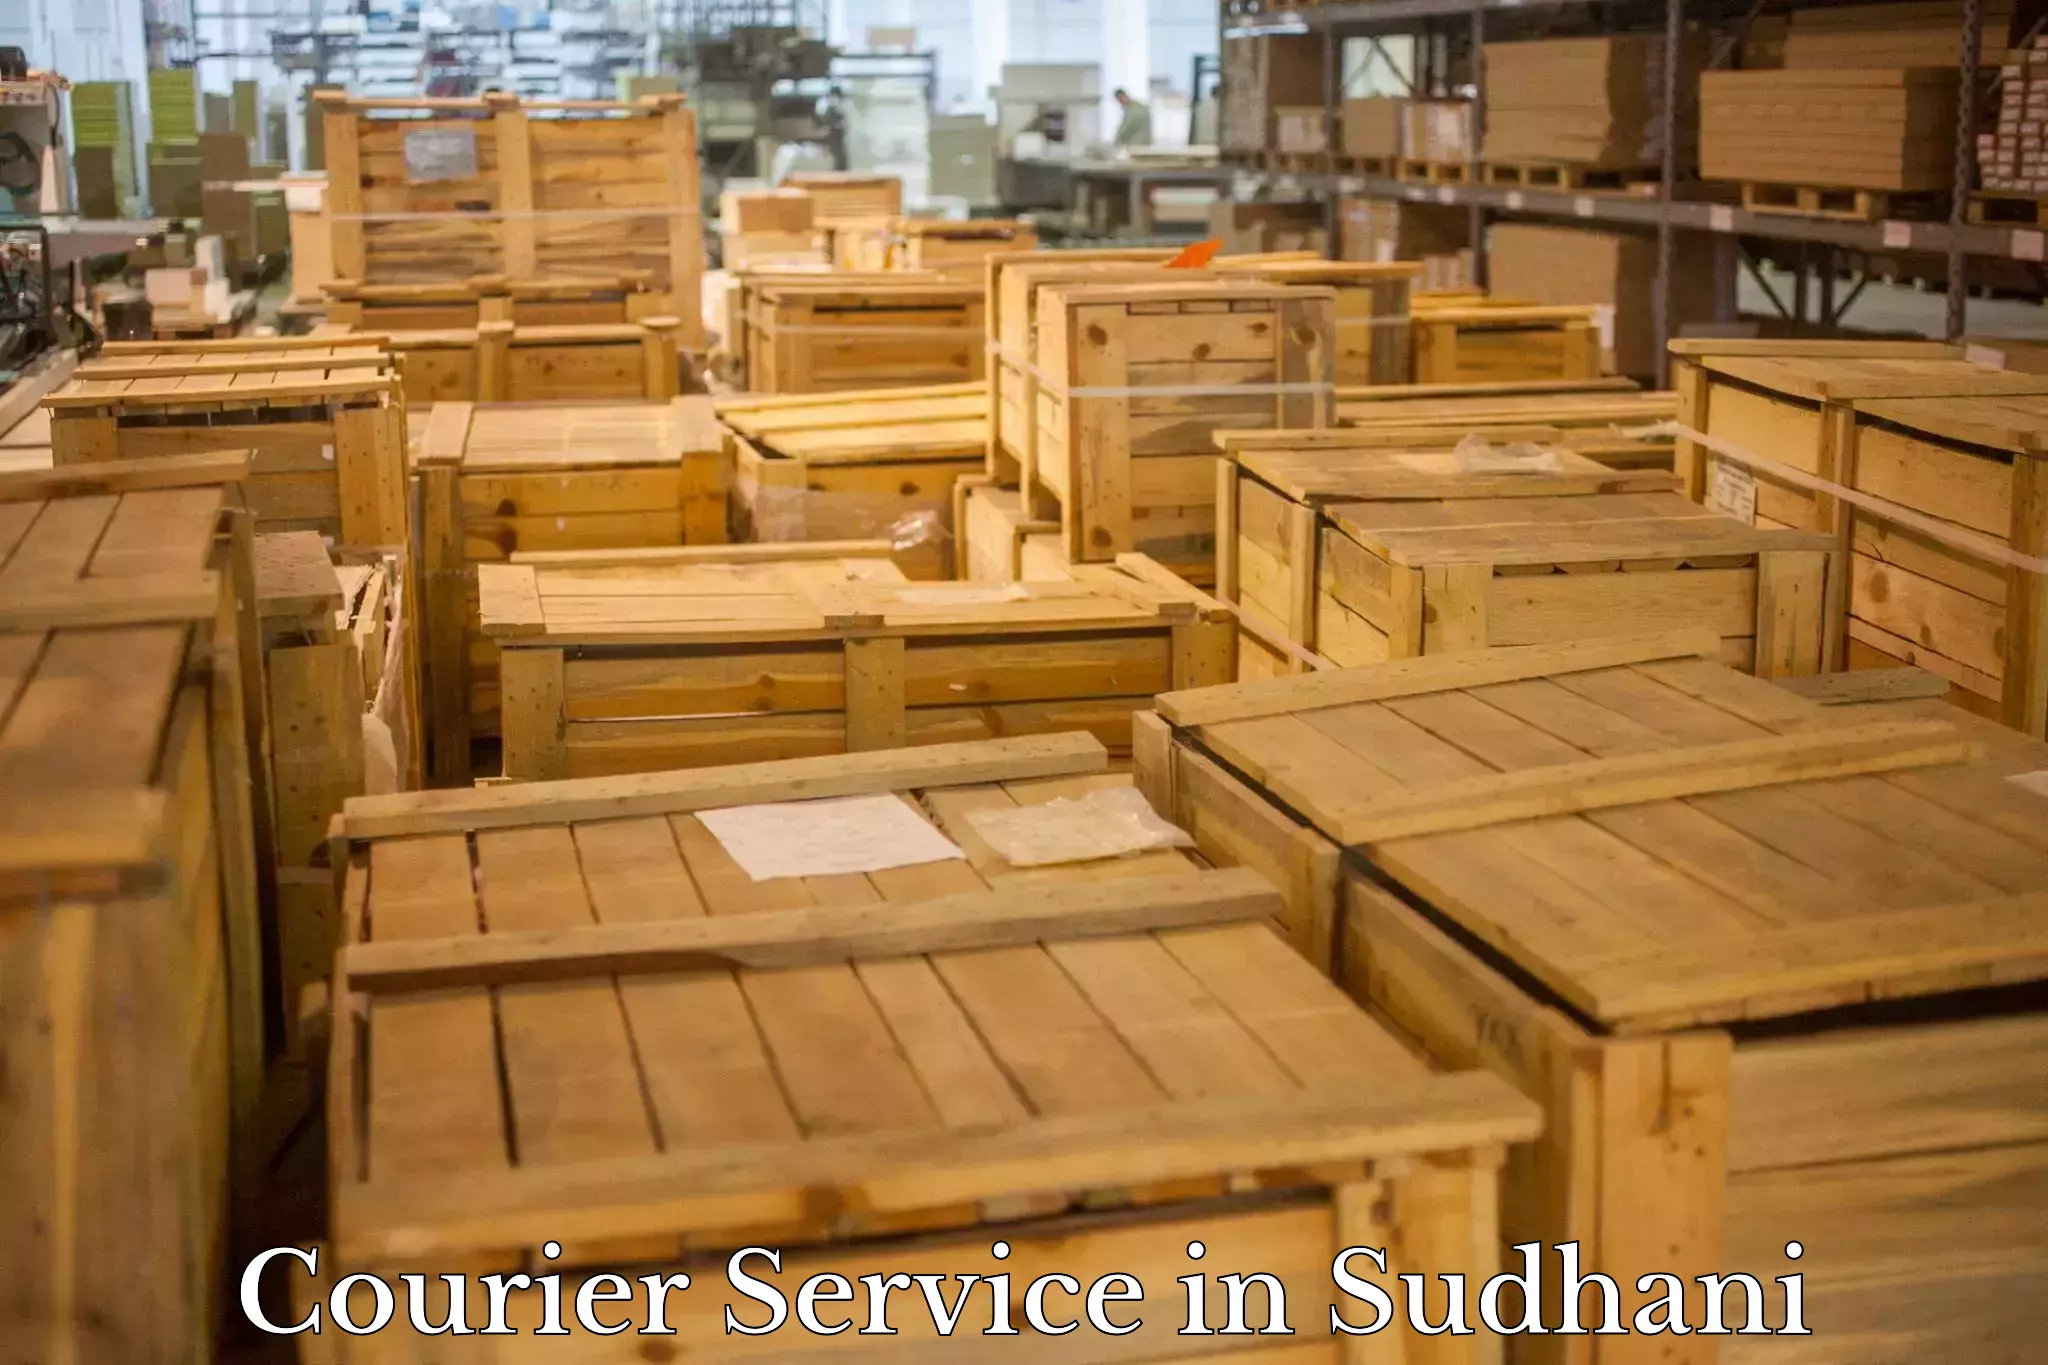 International parcel service in Sudhani